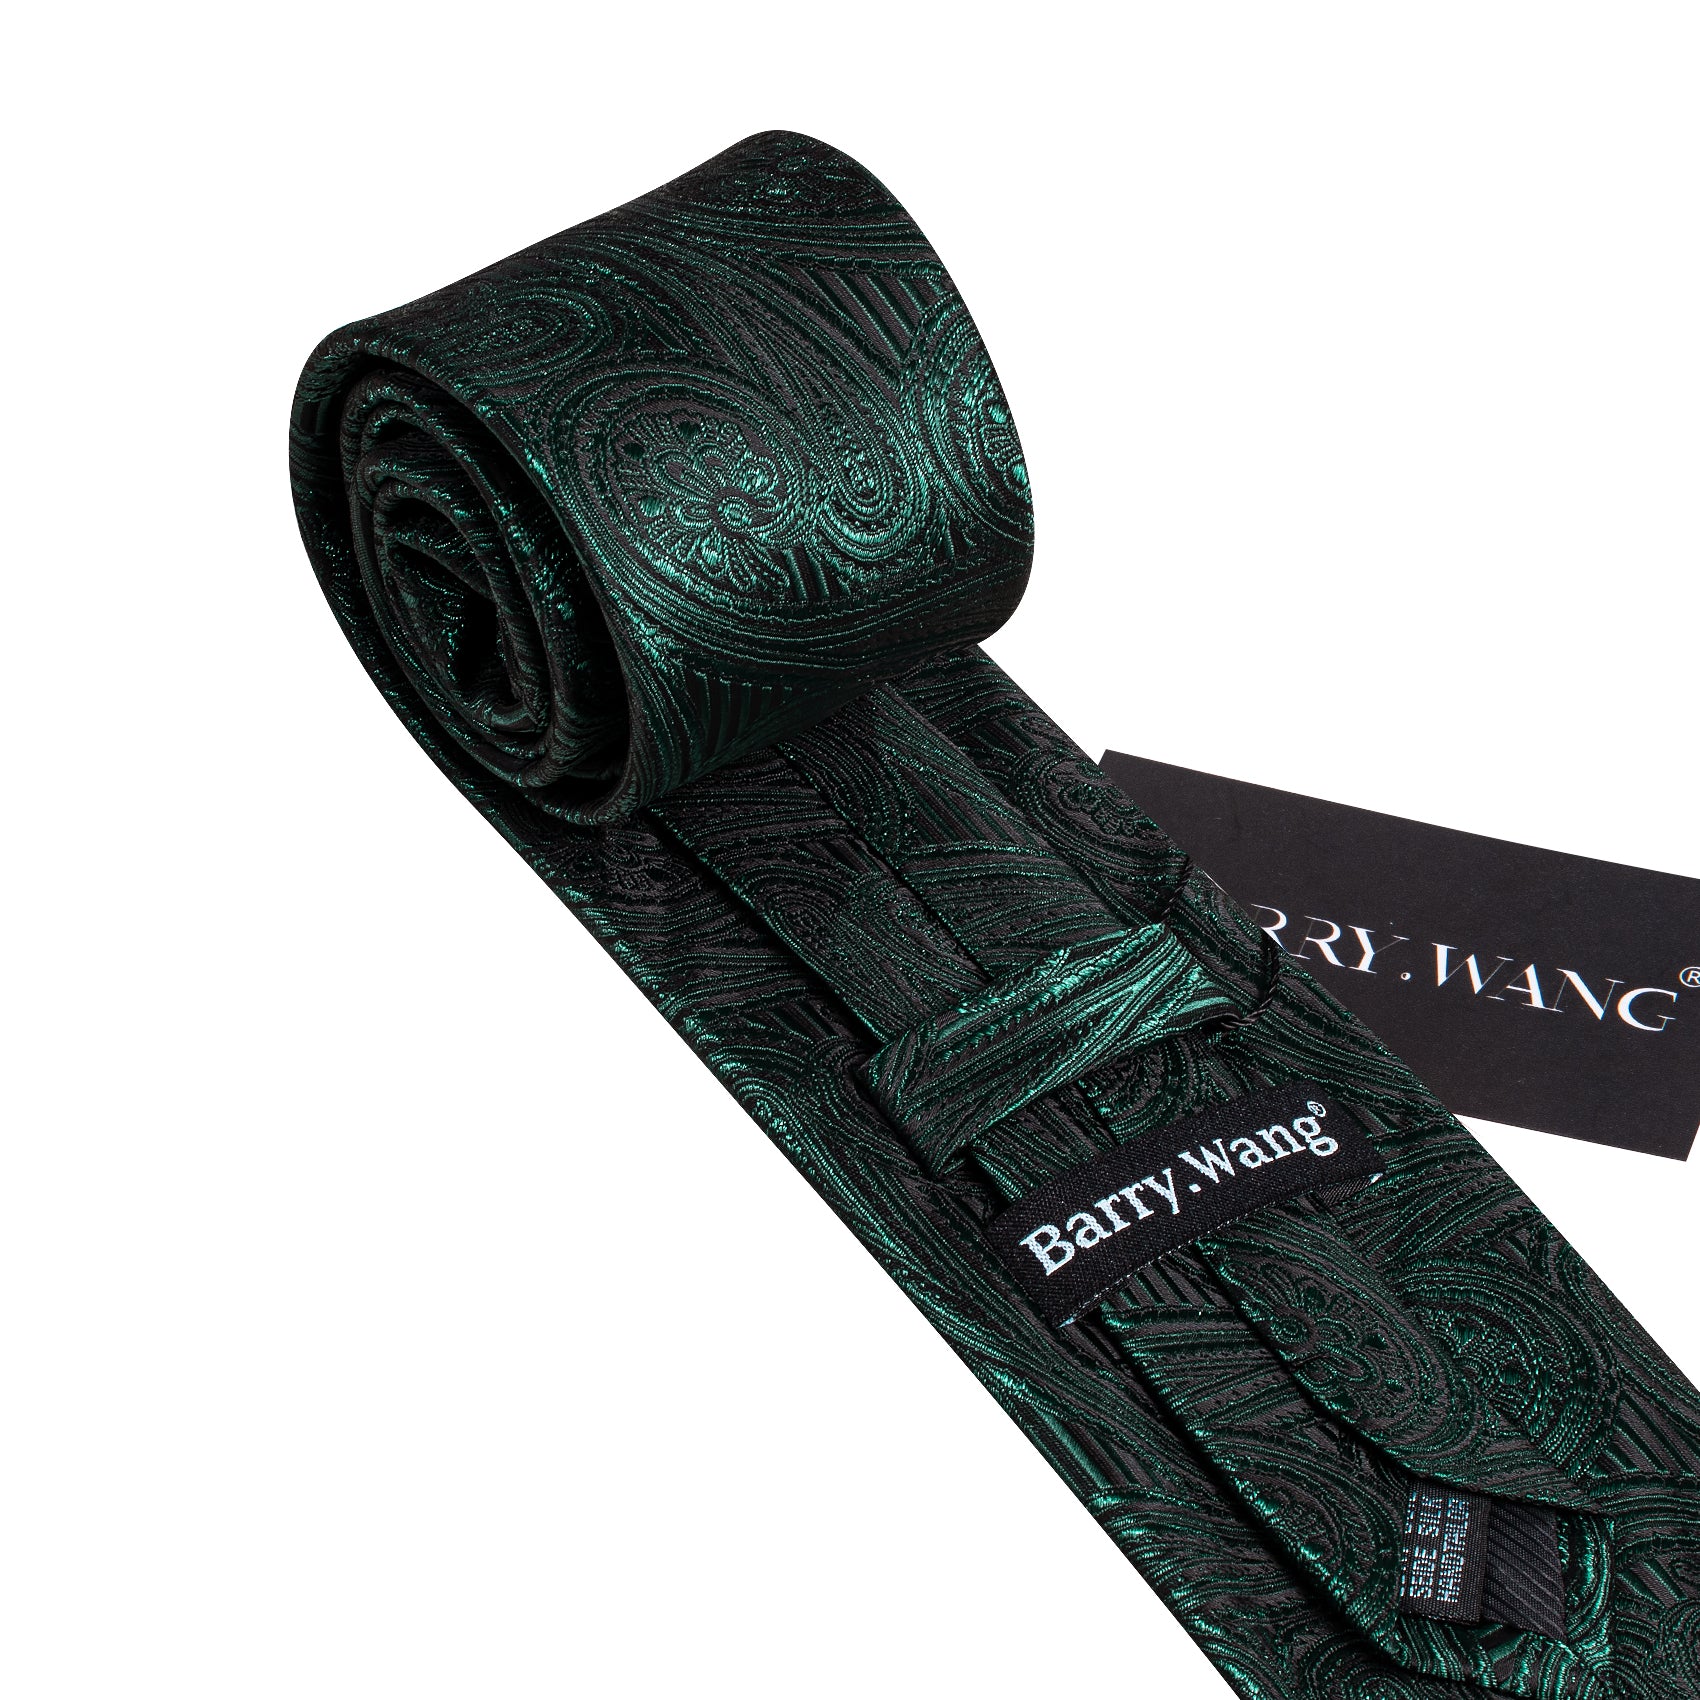 Barry Wang Green Tie Dark Olive Green Paisley Silk Tie Hanky Cufflinks Set